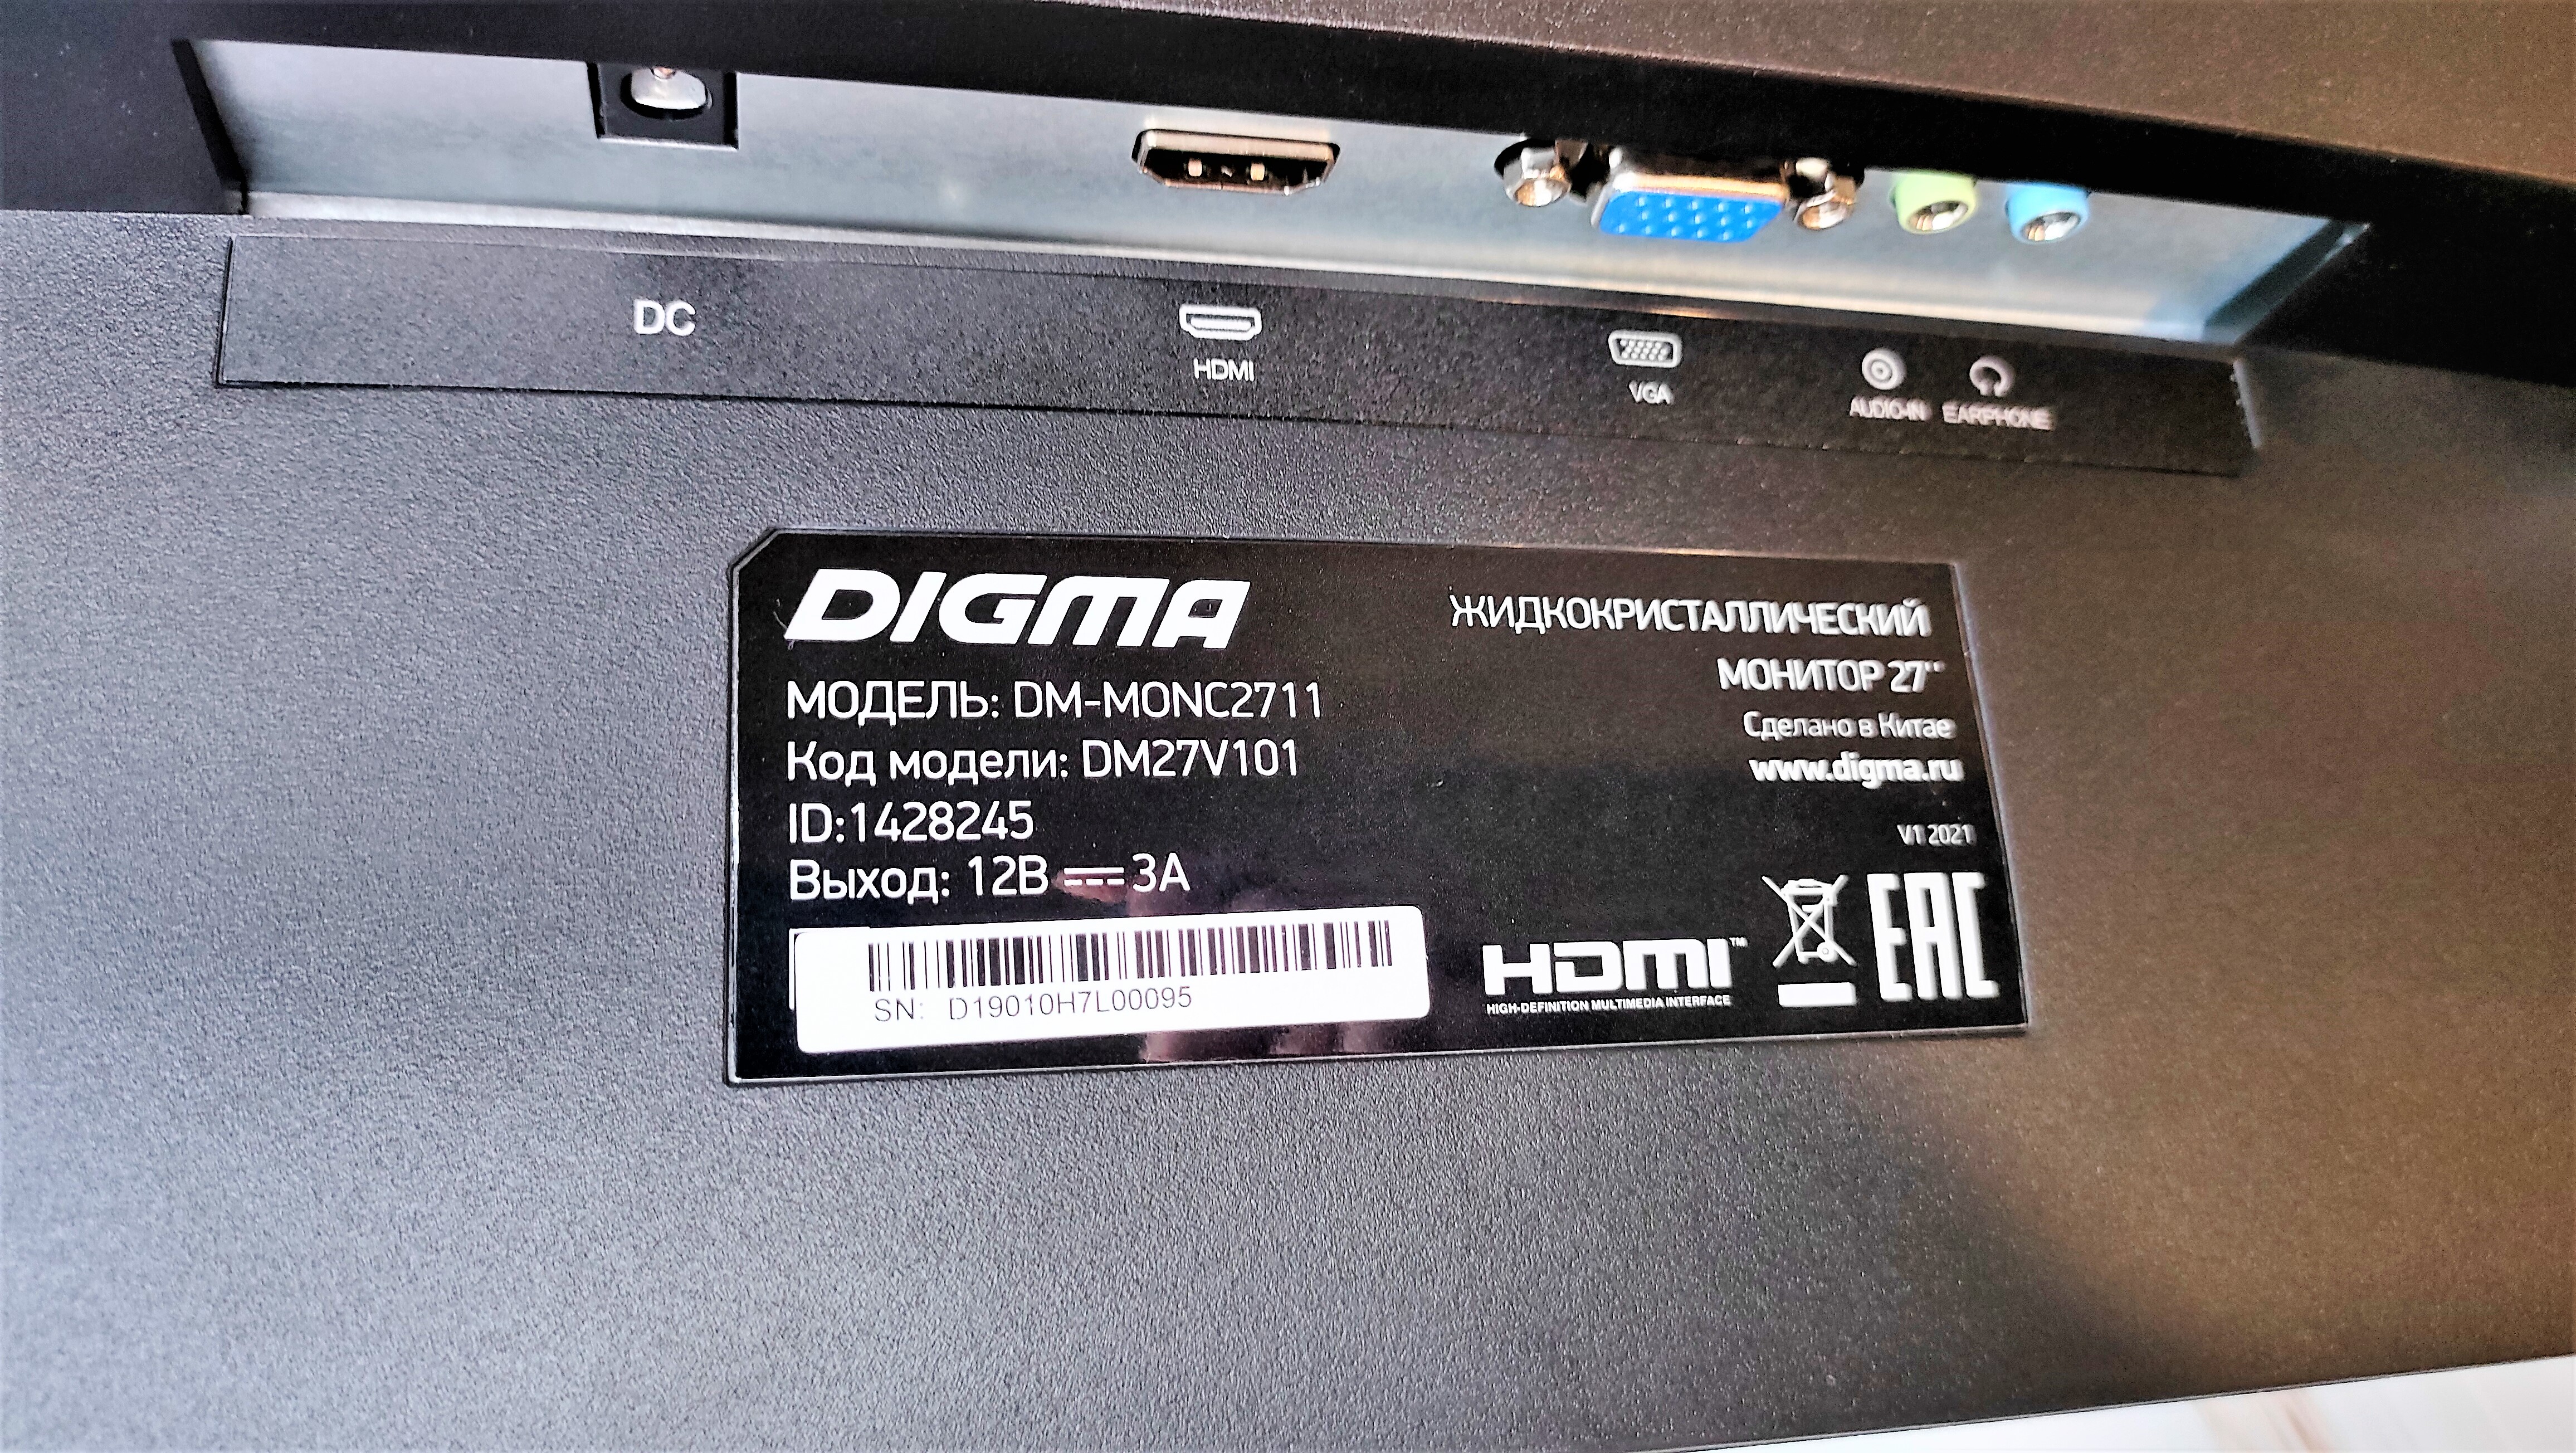 Телевизор digma pro 55l. Монитор Digma monb2403. Монитор Digma DM-monb2205 20.7". Монитор Digma 27 дюймов. Телевизор Digma 32 дюйма.